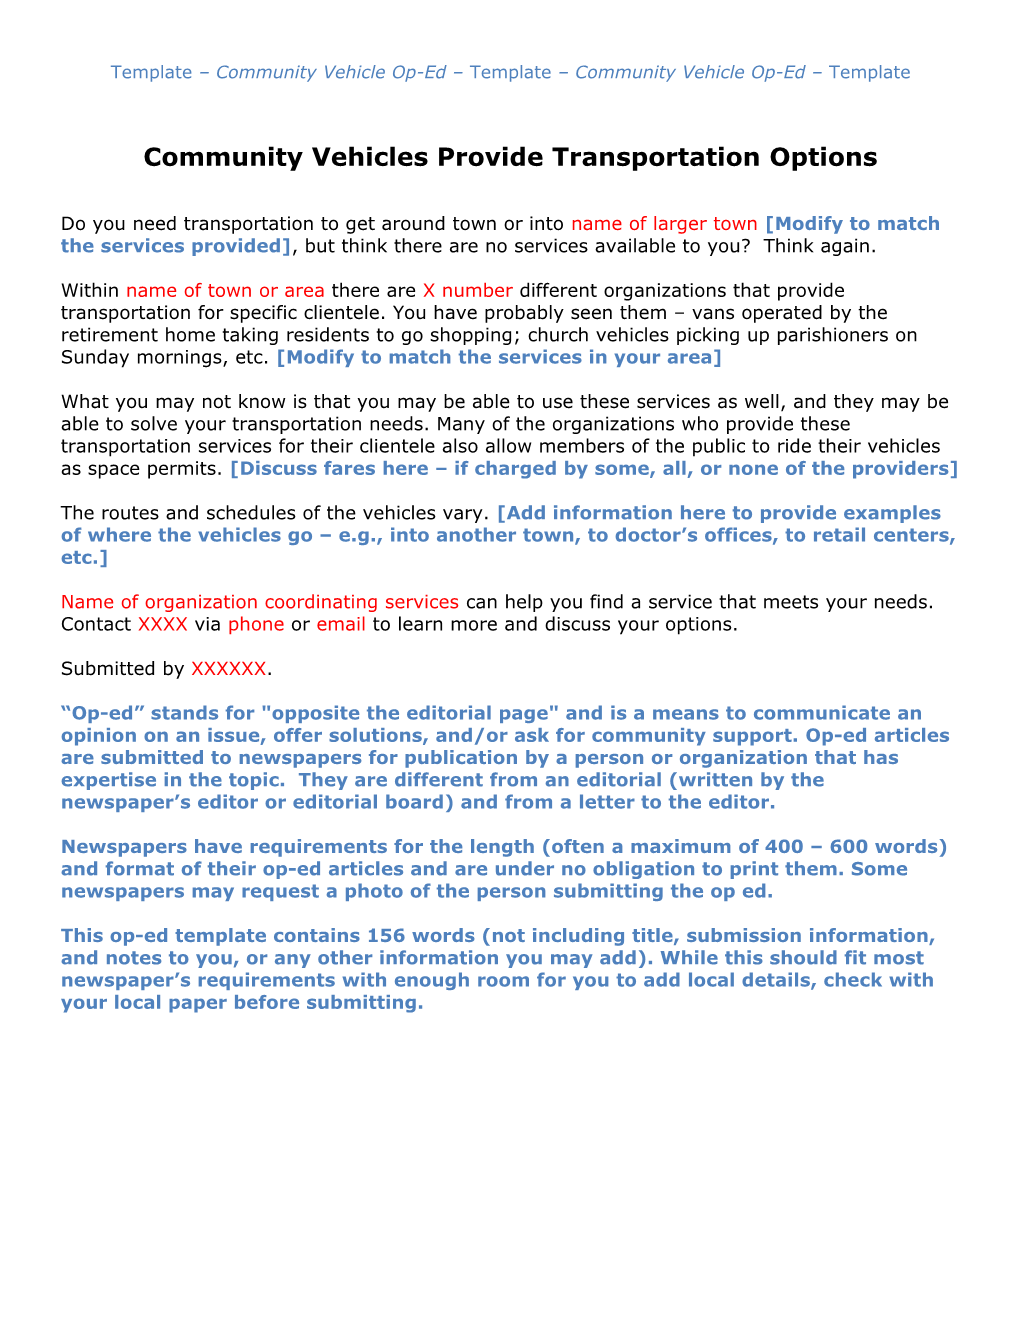 Community Vehicles Provide Transportation Options